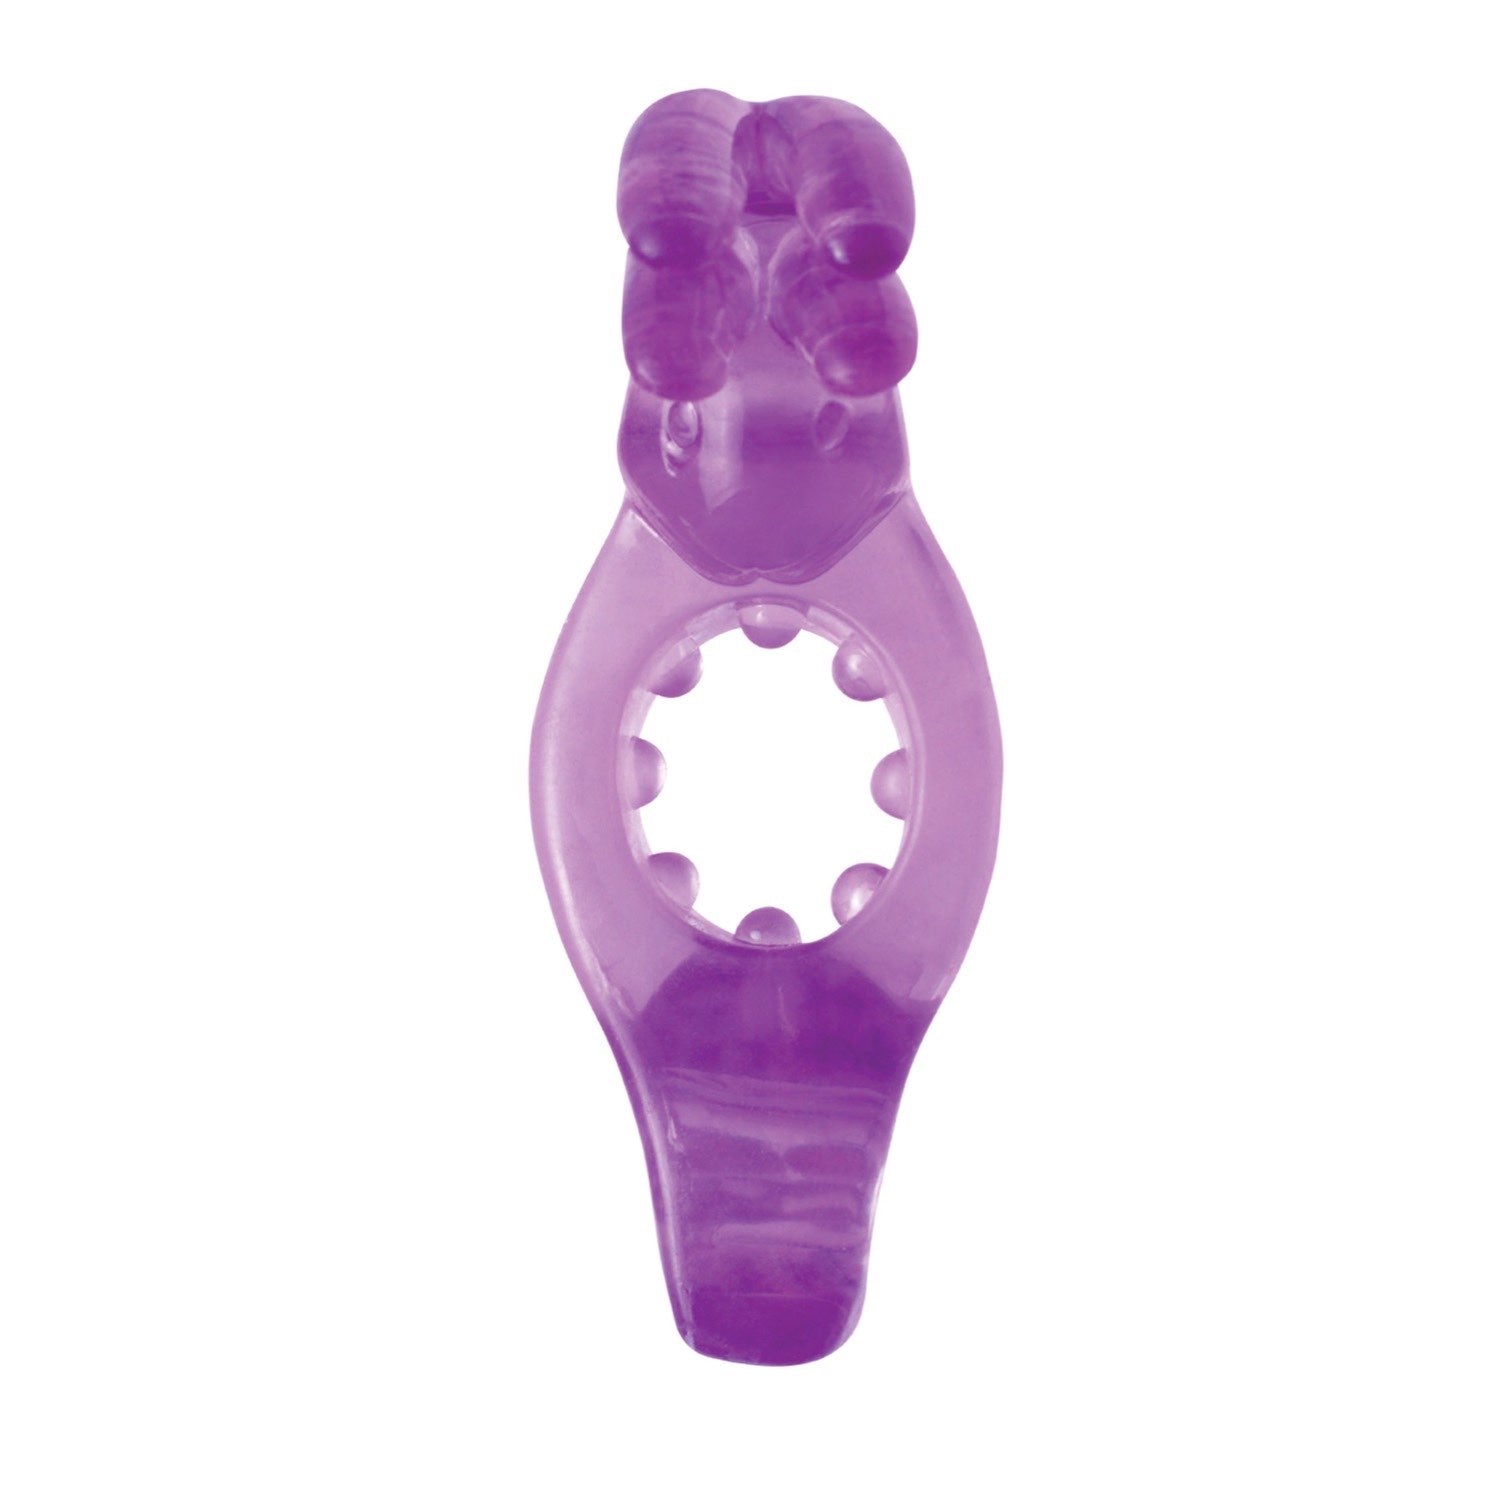  Wonderful Wonderful Wabbit - Purple Dual Vibrating Cock Ring by Pipedream